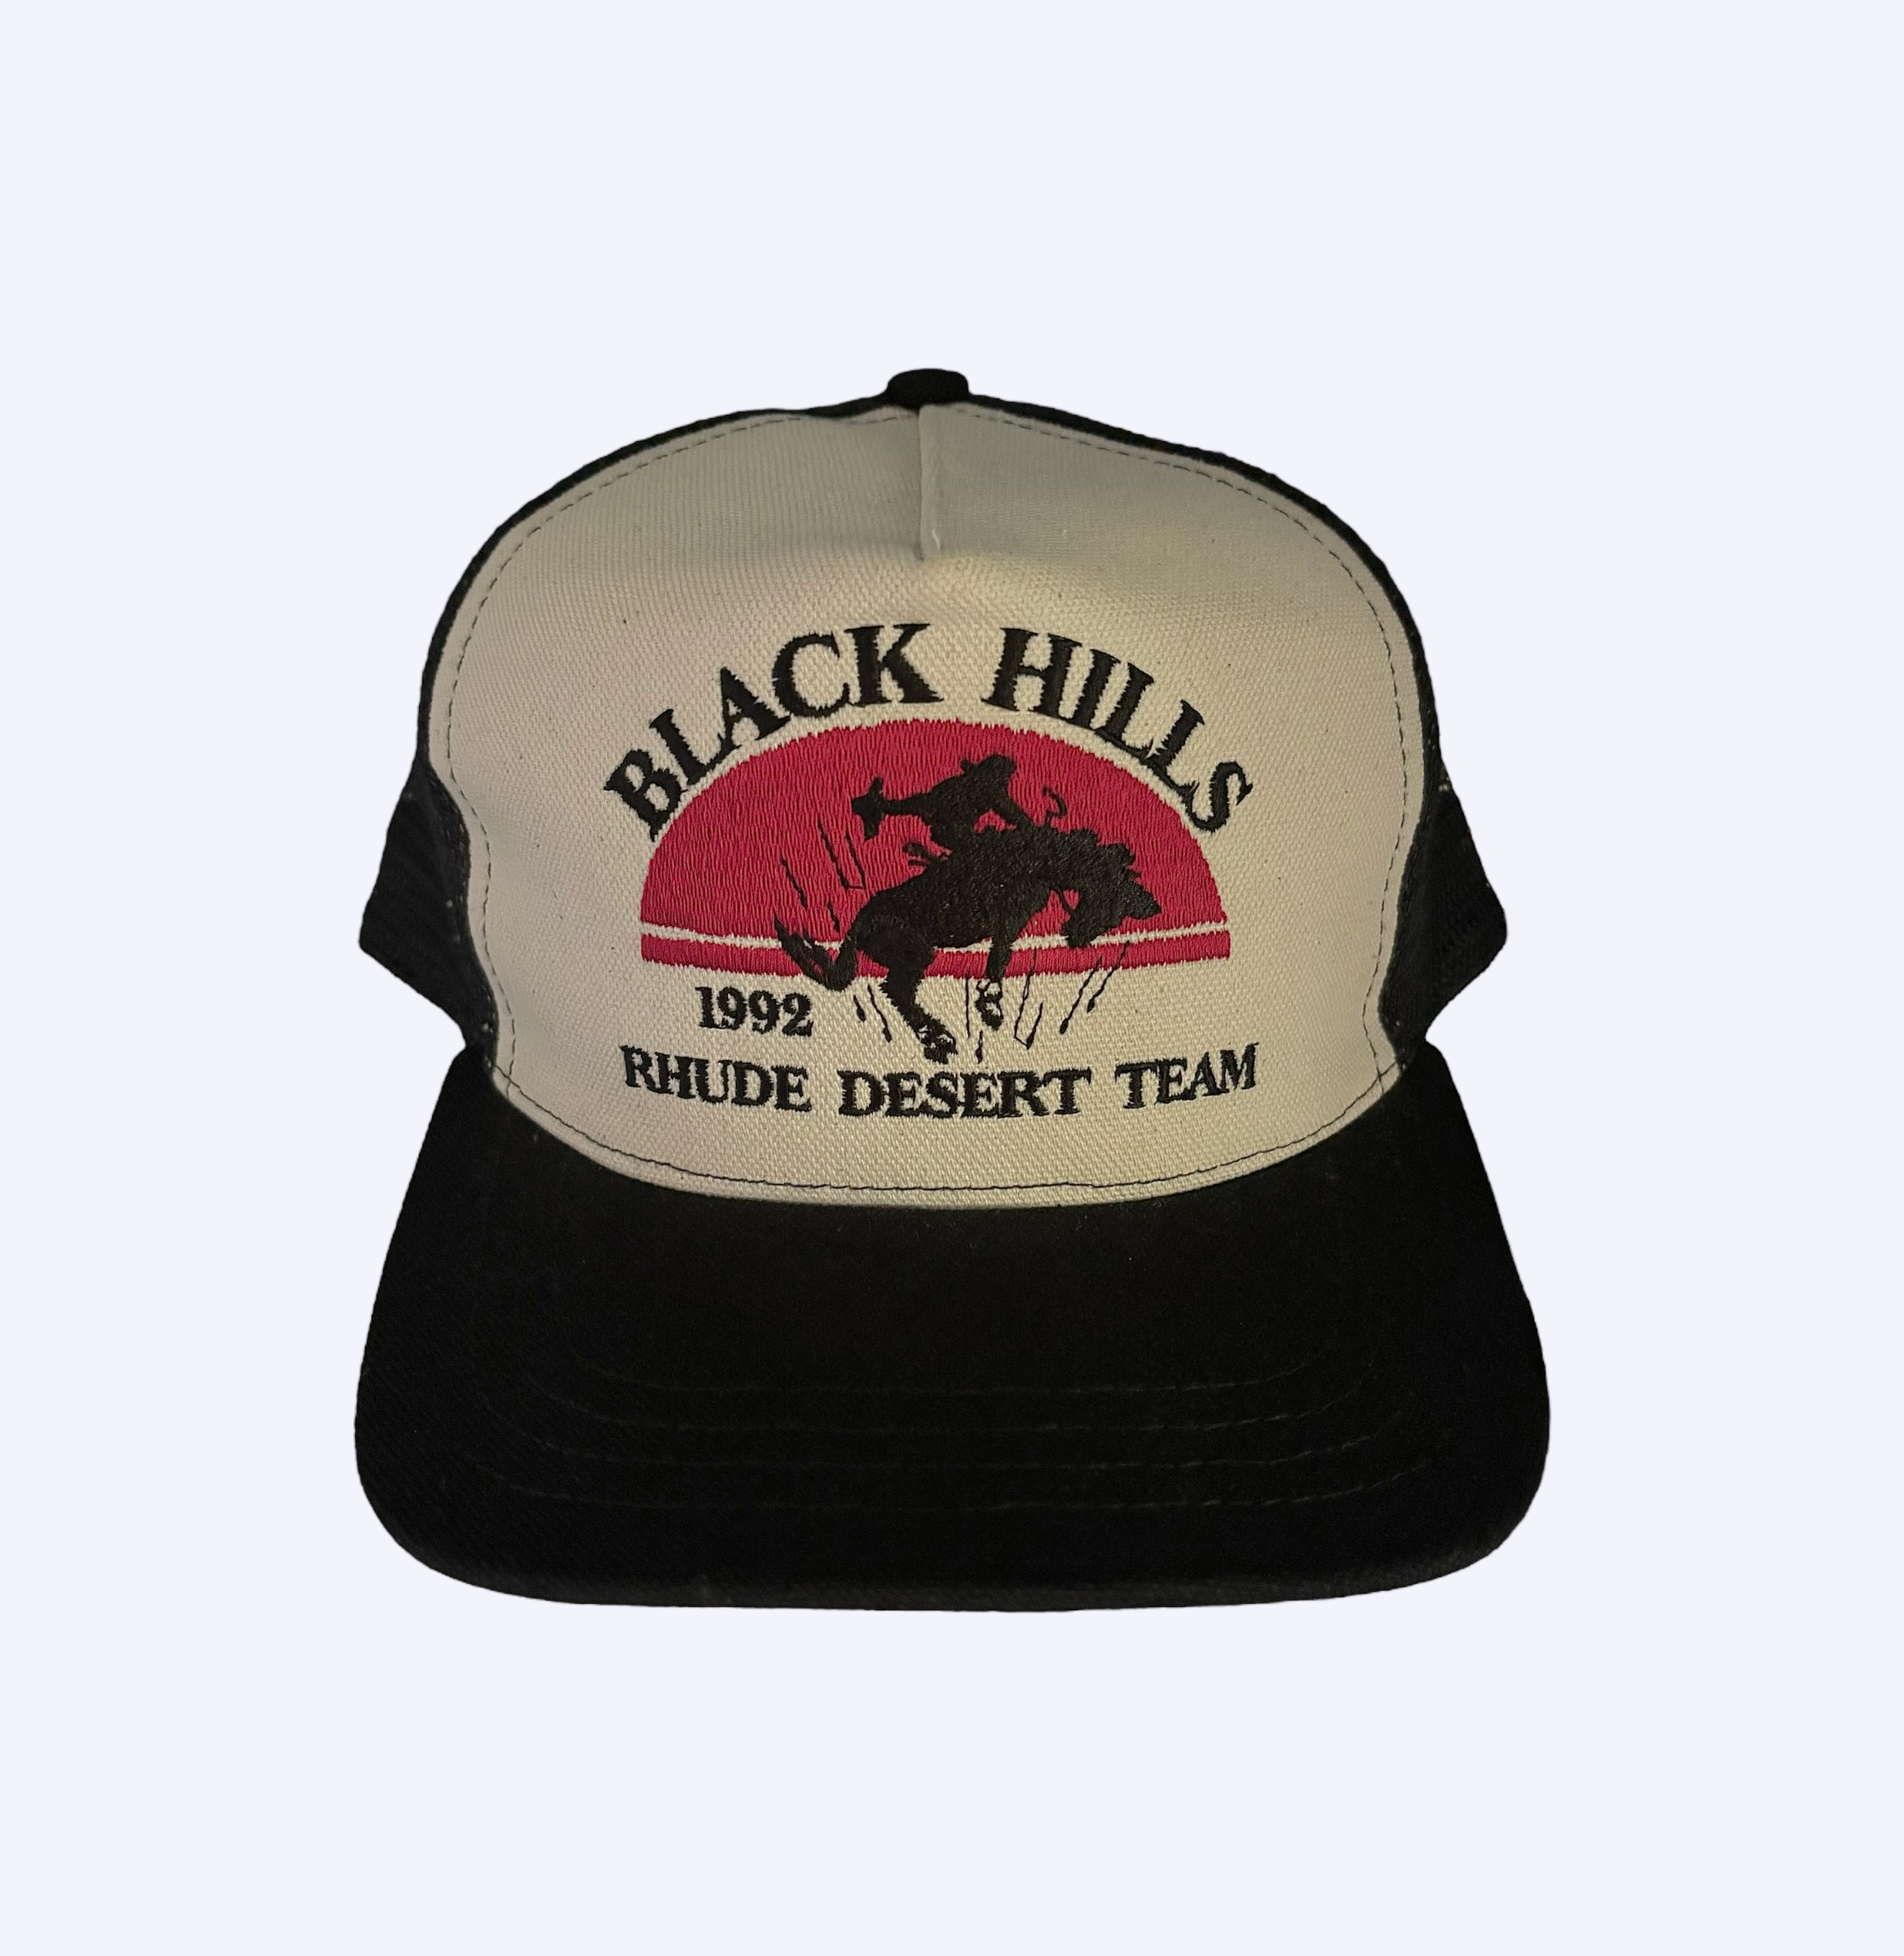 Rhude Black Hills Rodeo Hat